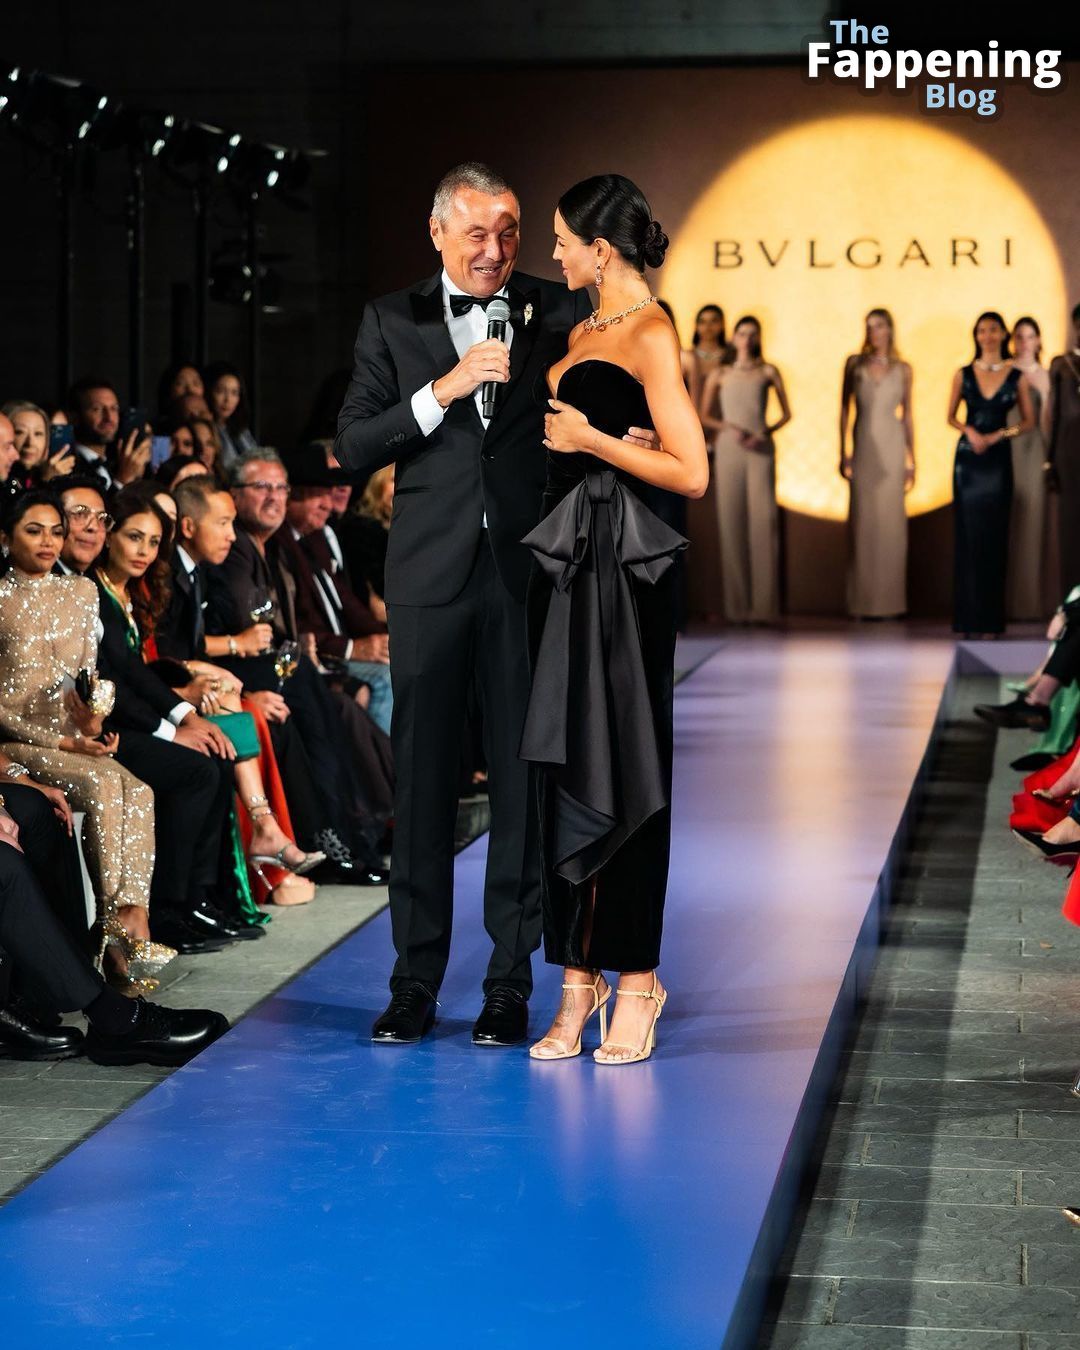 Eiza Gonzalez Looks Beautiful in a Low-Cut Dress at the Bulgari Event (10 Photos)